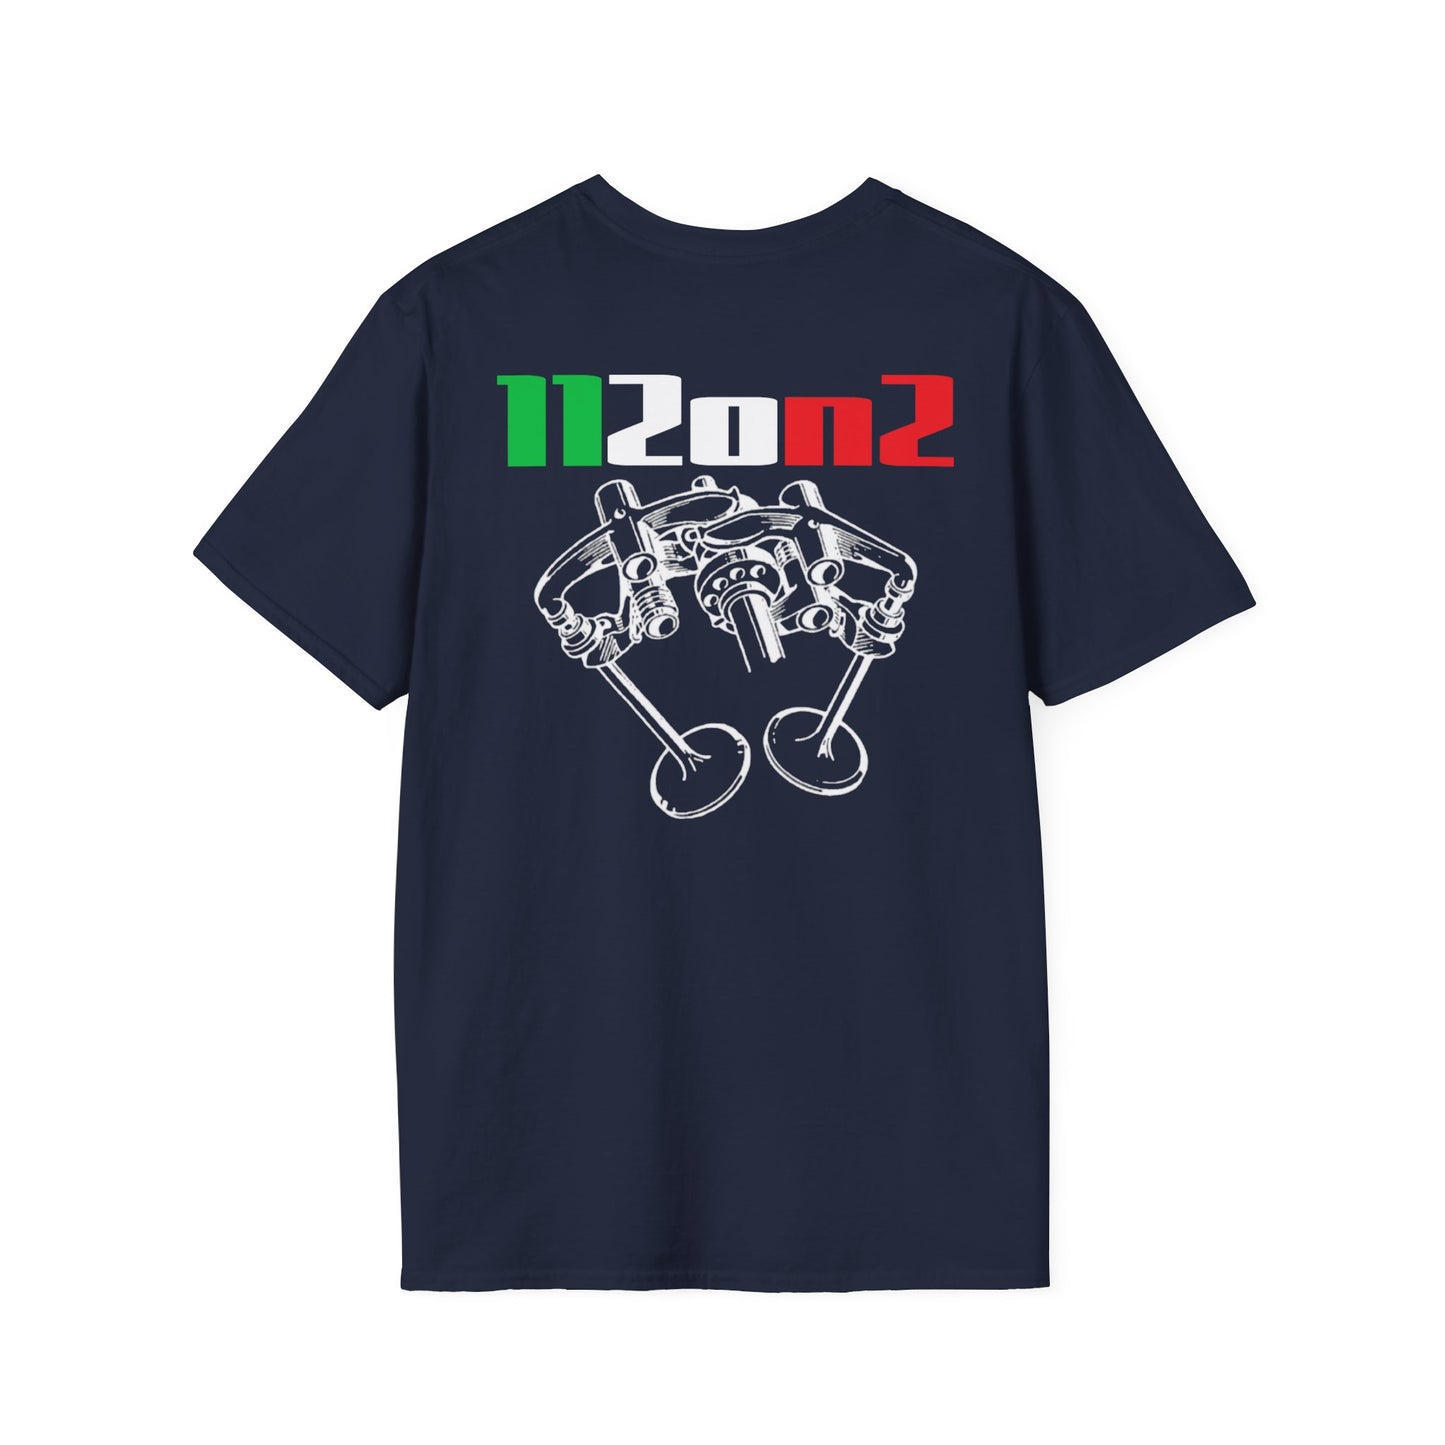 112on2 T-Shirt D2